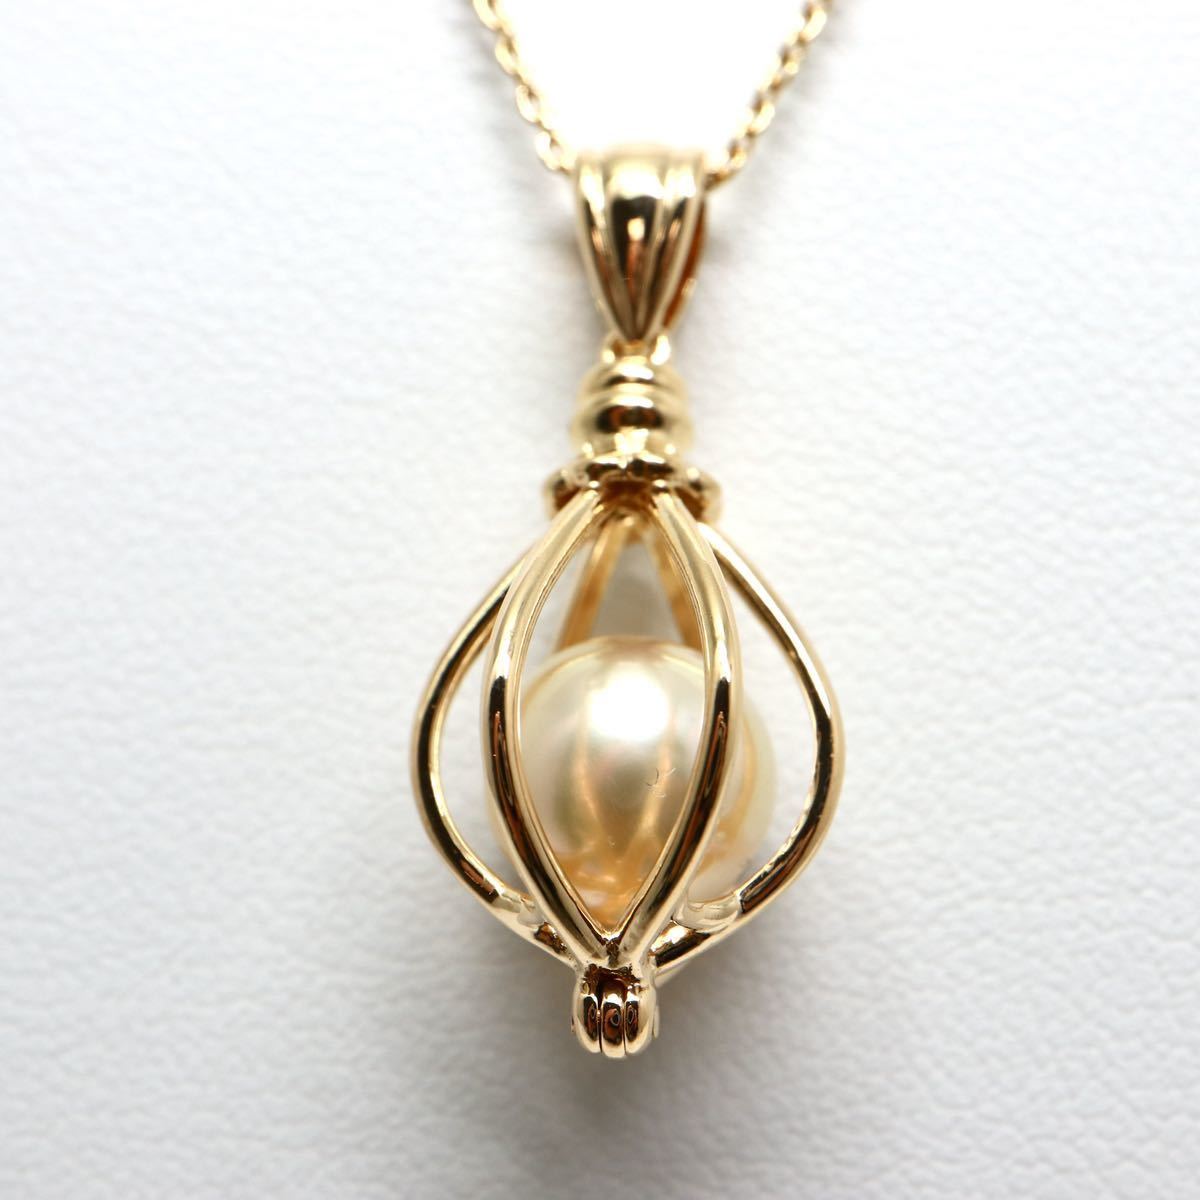 TASAKI(田崎真珠)《K18アコヤ本真珠ネックレス》F 約8.0mm珠 約5.4g 約49cm pearl necklace jewelry EC4/EC7